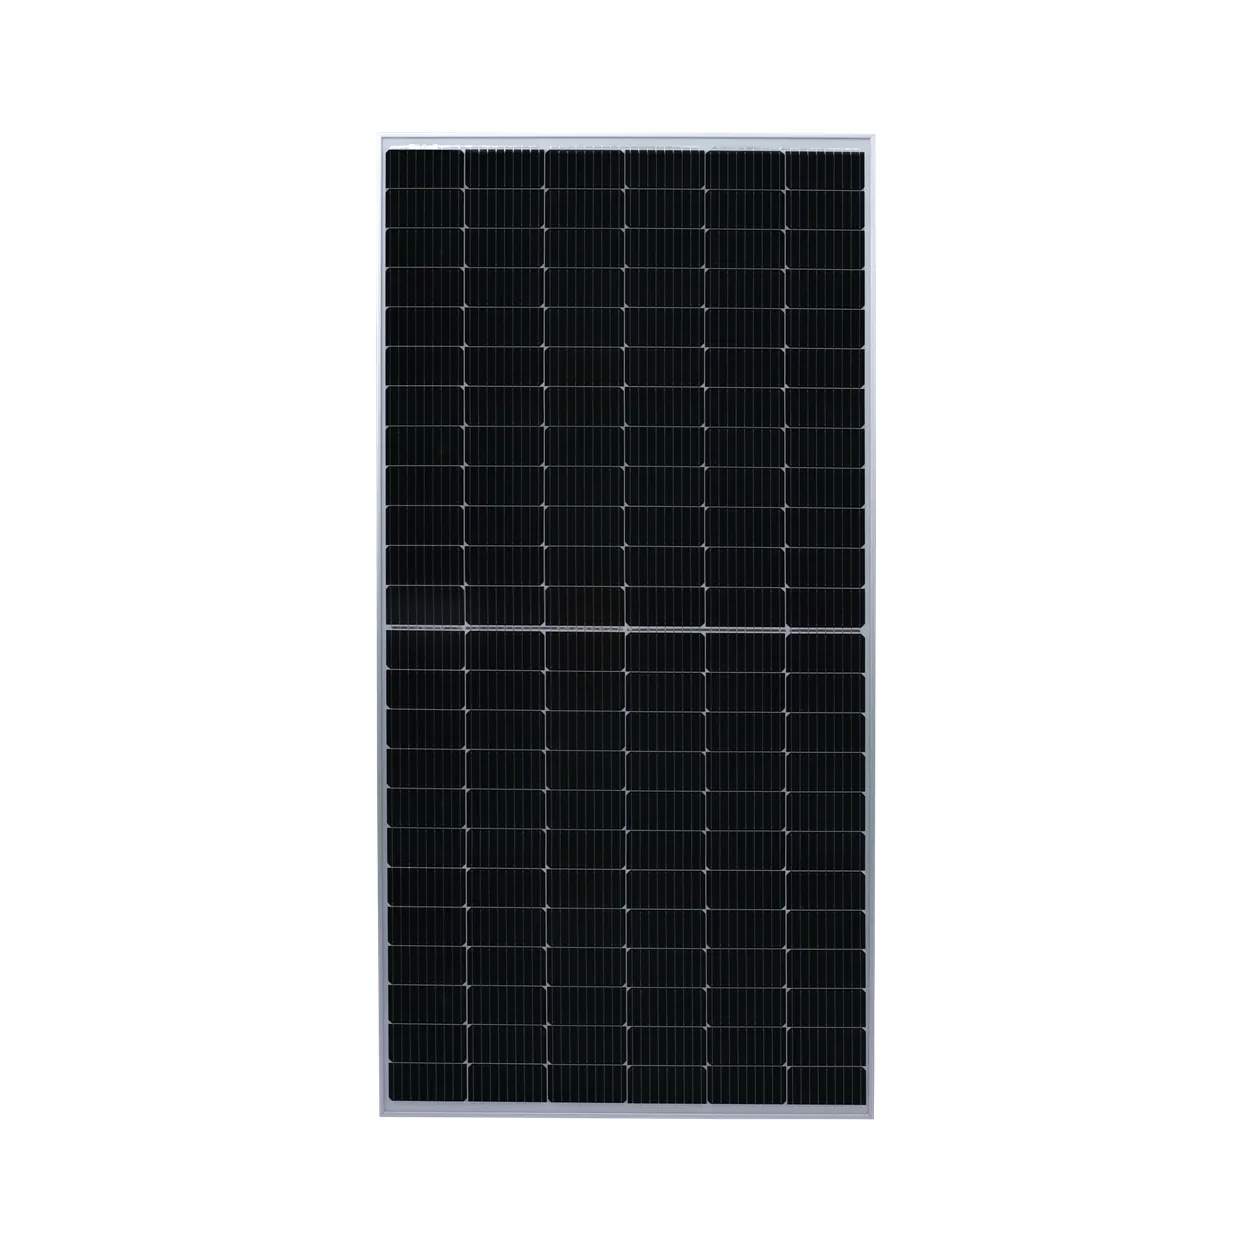 China Großhandel Solarmodule Hersteller 540w Solar panel Preis für Solar Power System Home